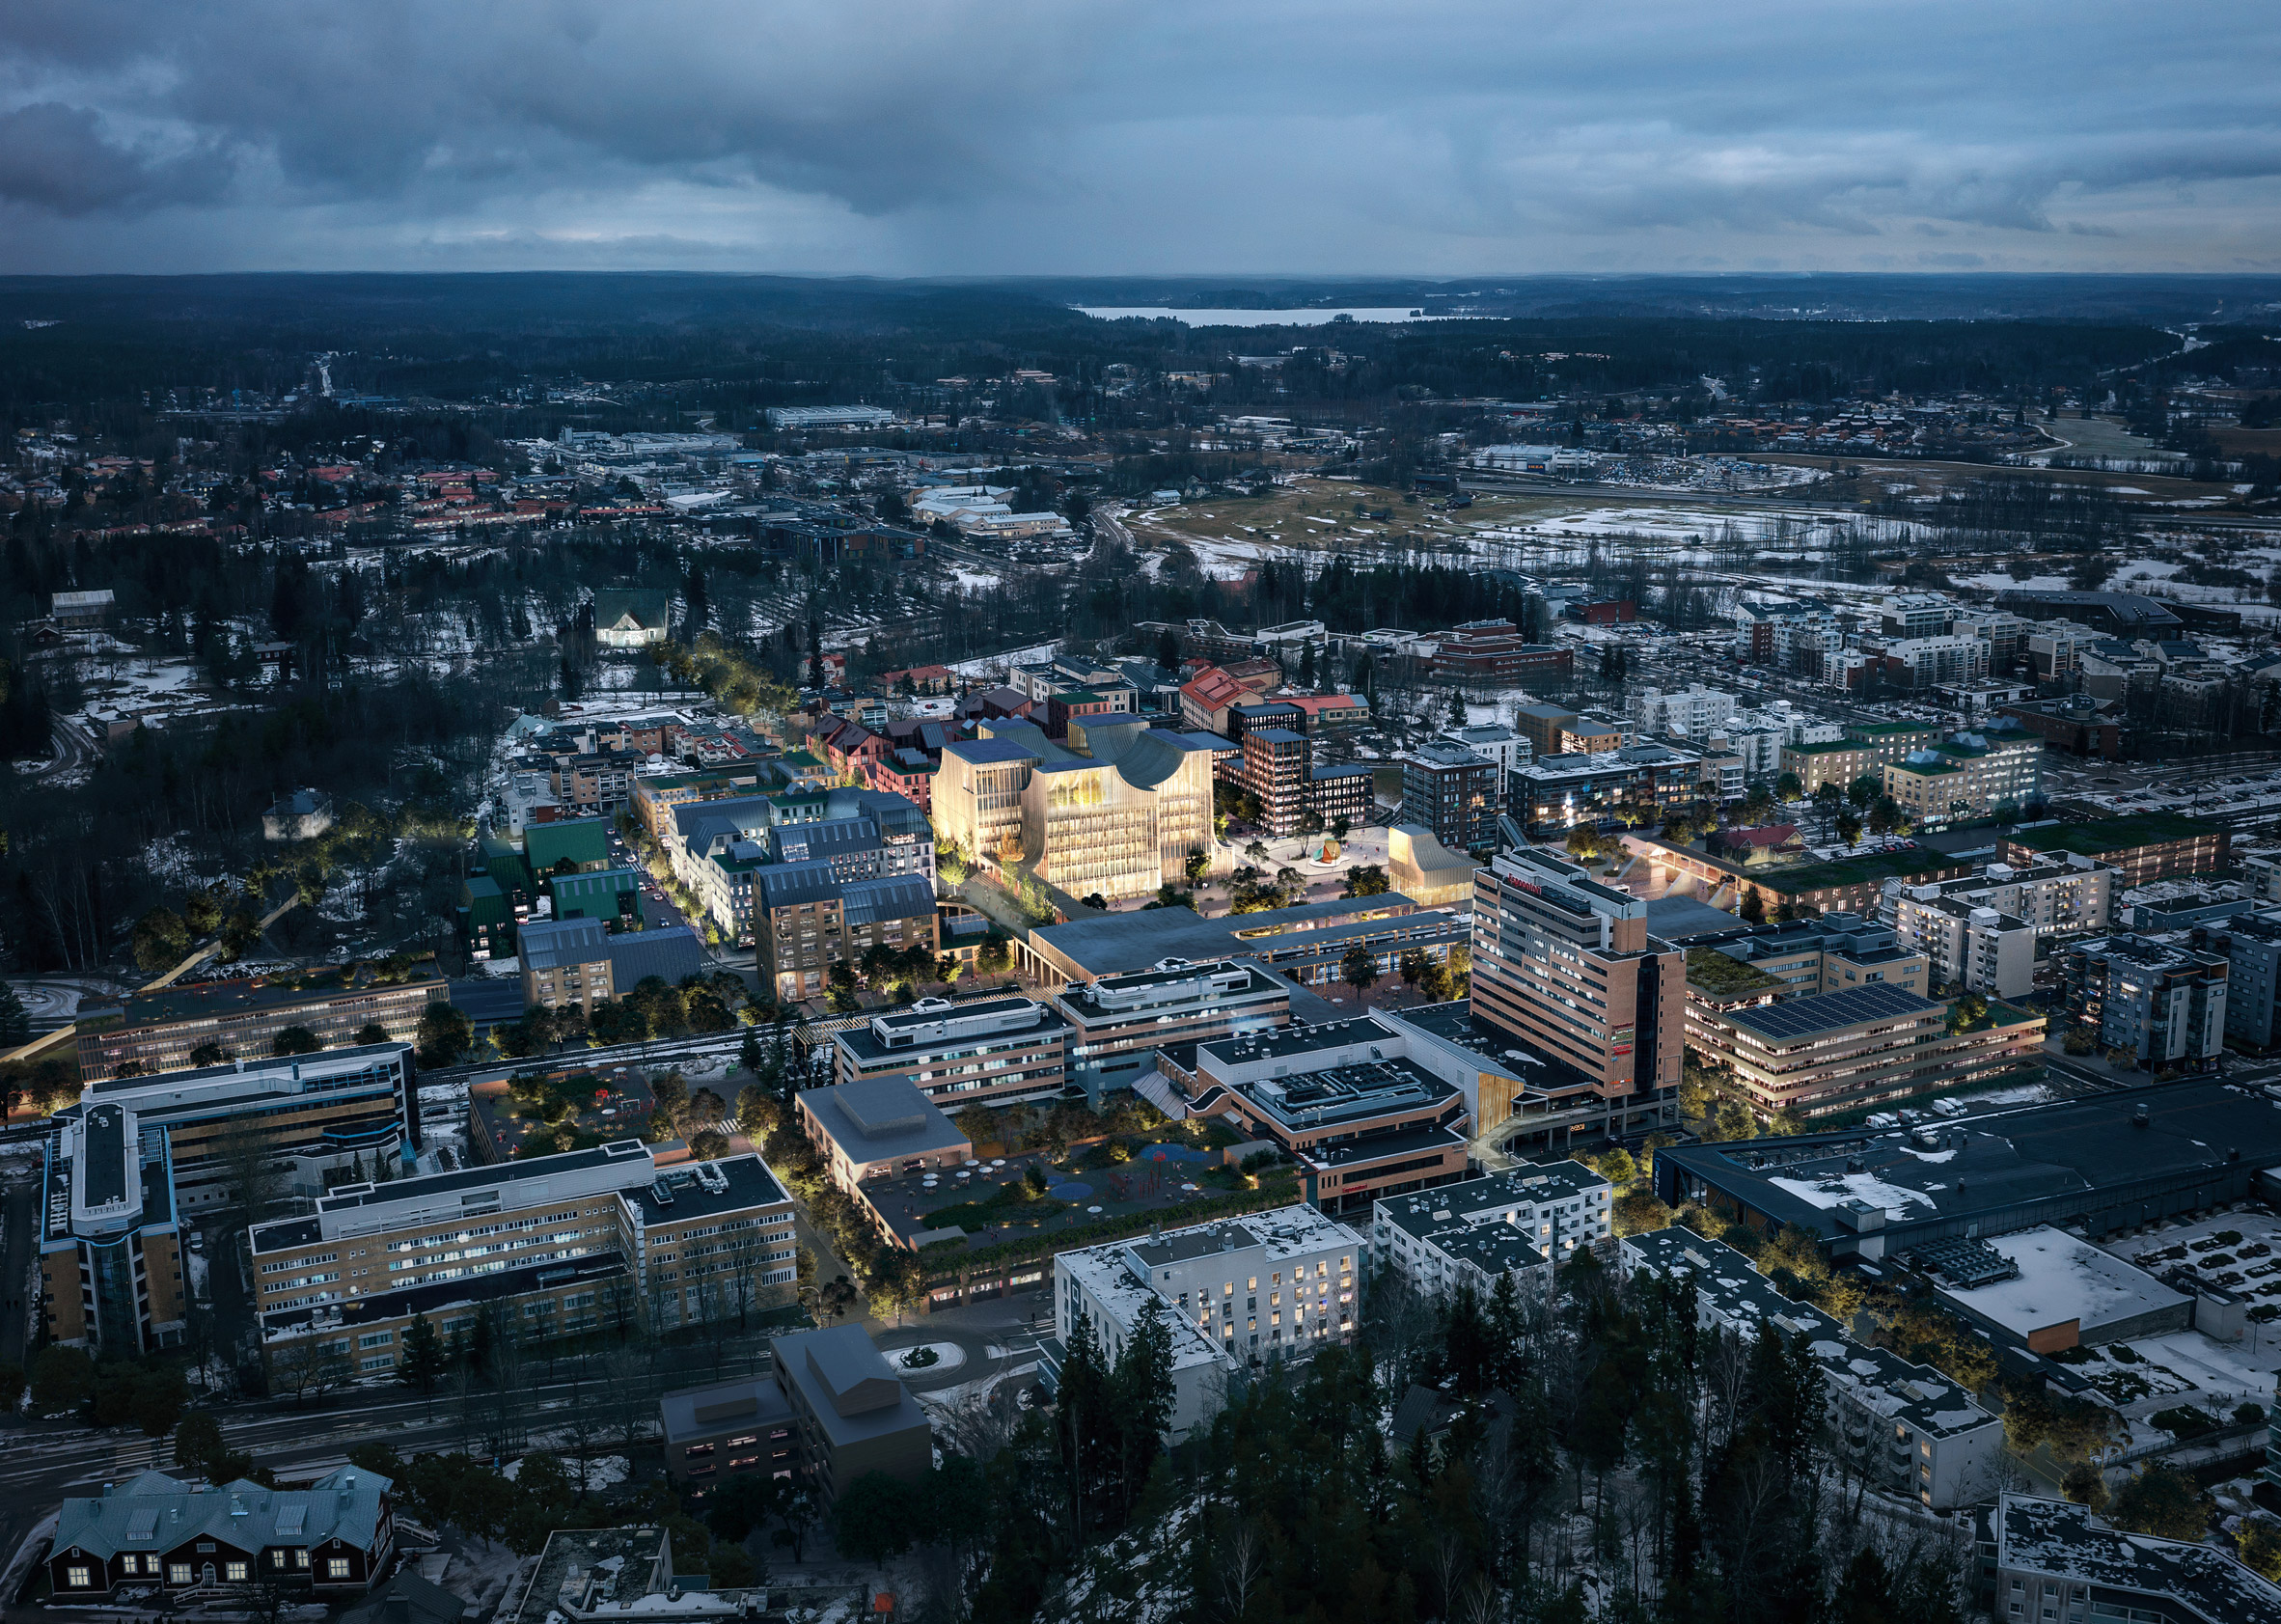 Aerial view of Espoo